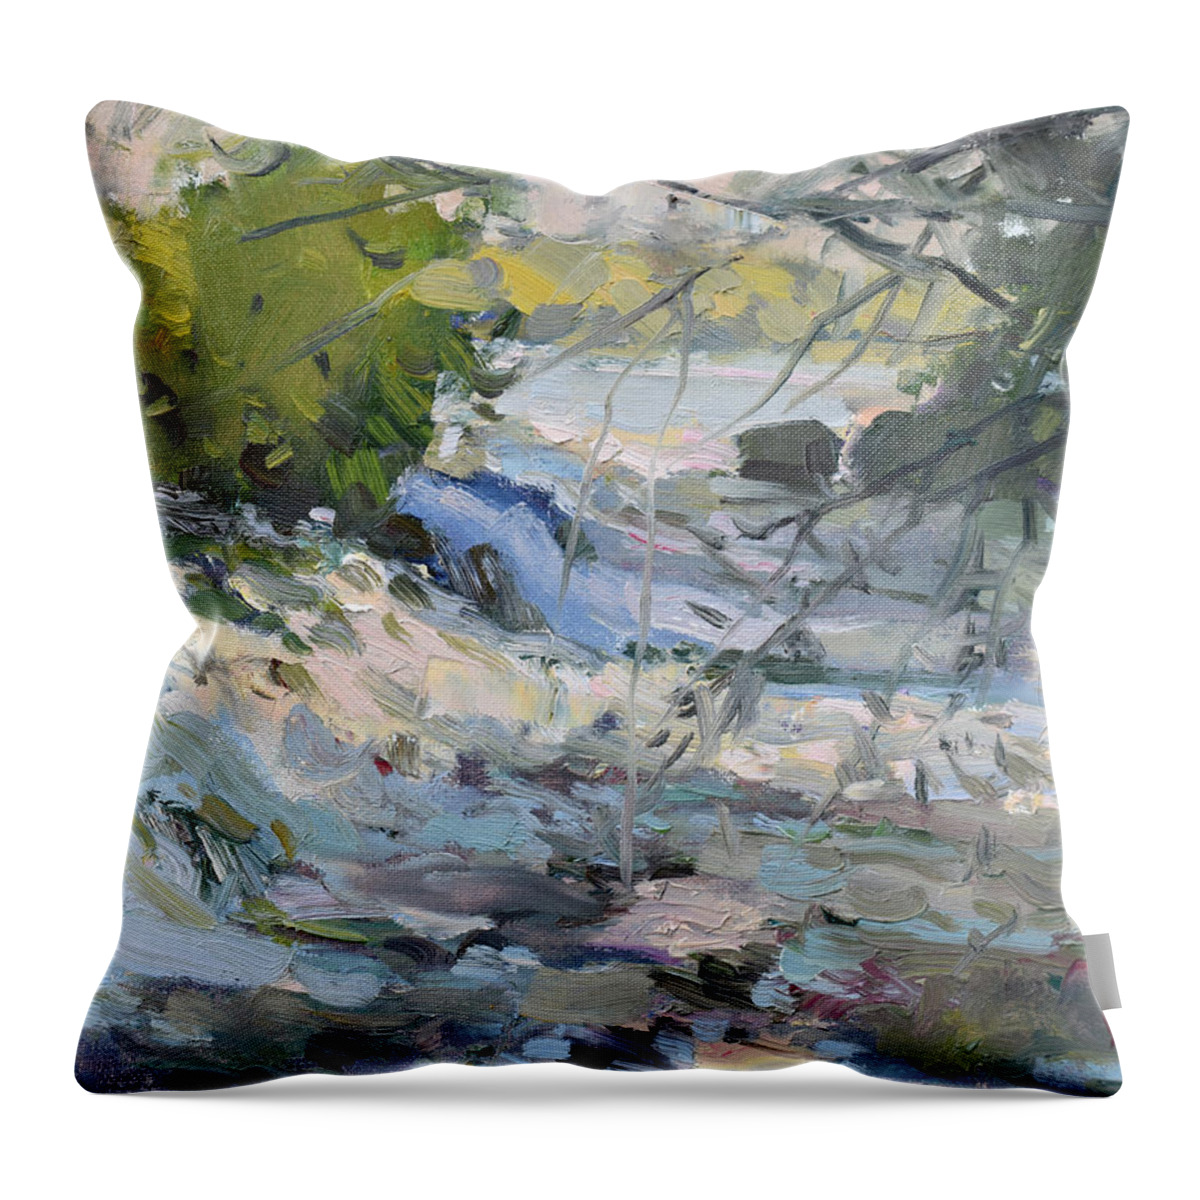 Niagara River Throw Pillow featuring the painting Niagara River by Ylli Haruni